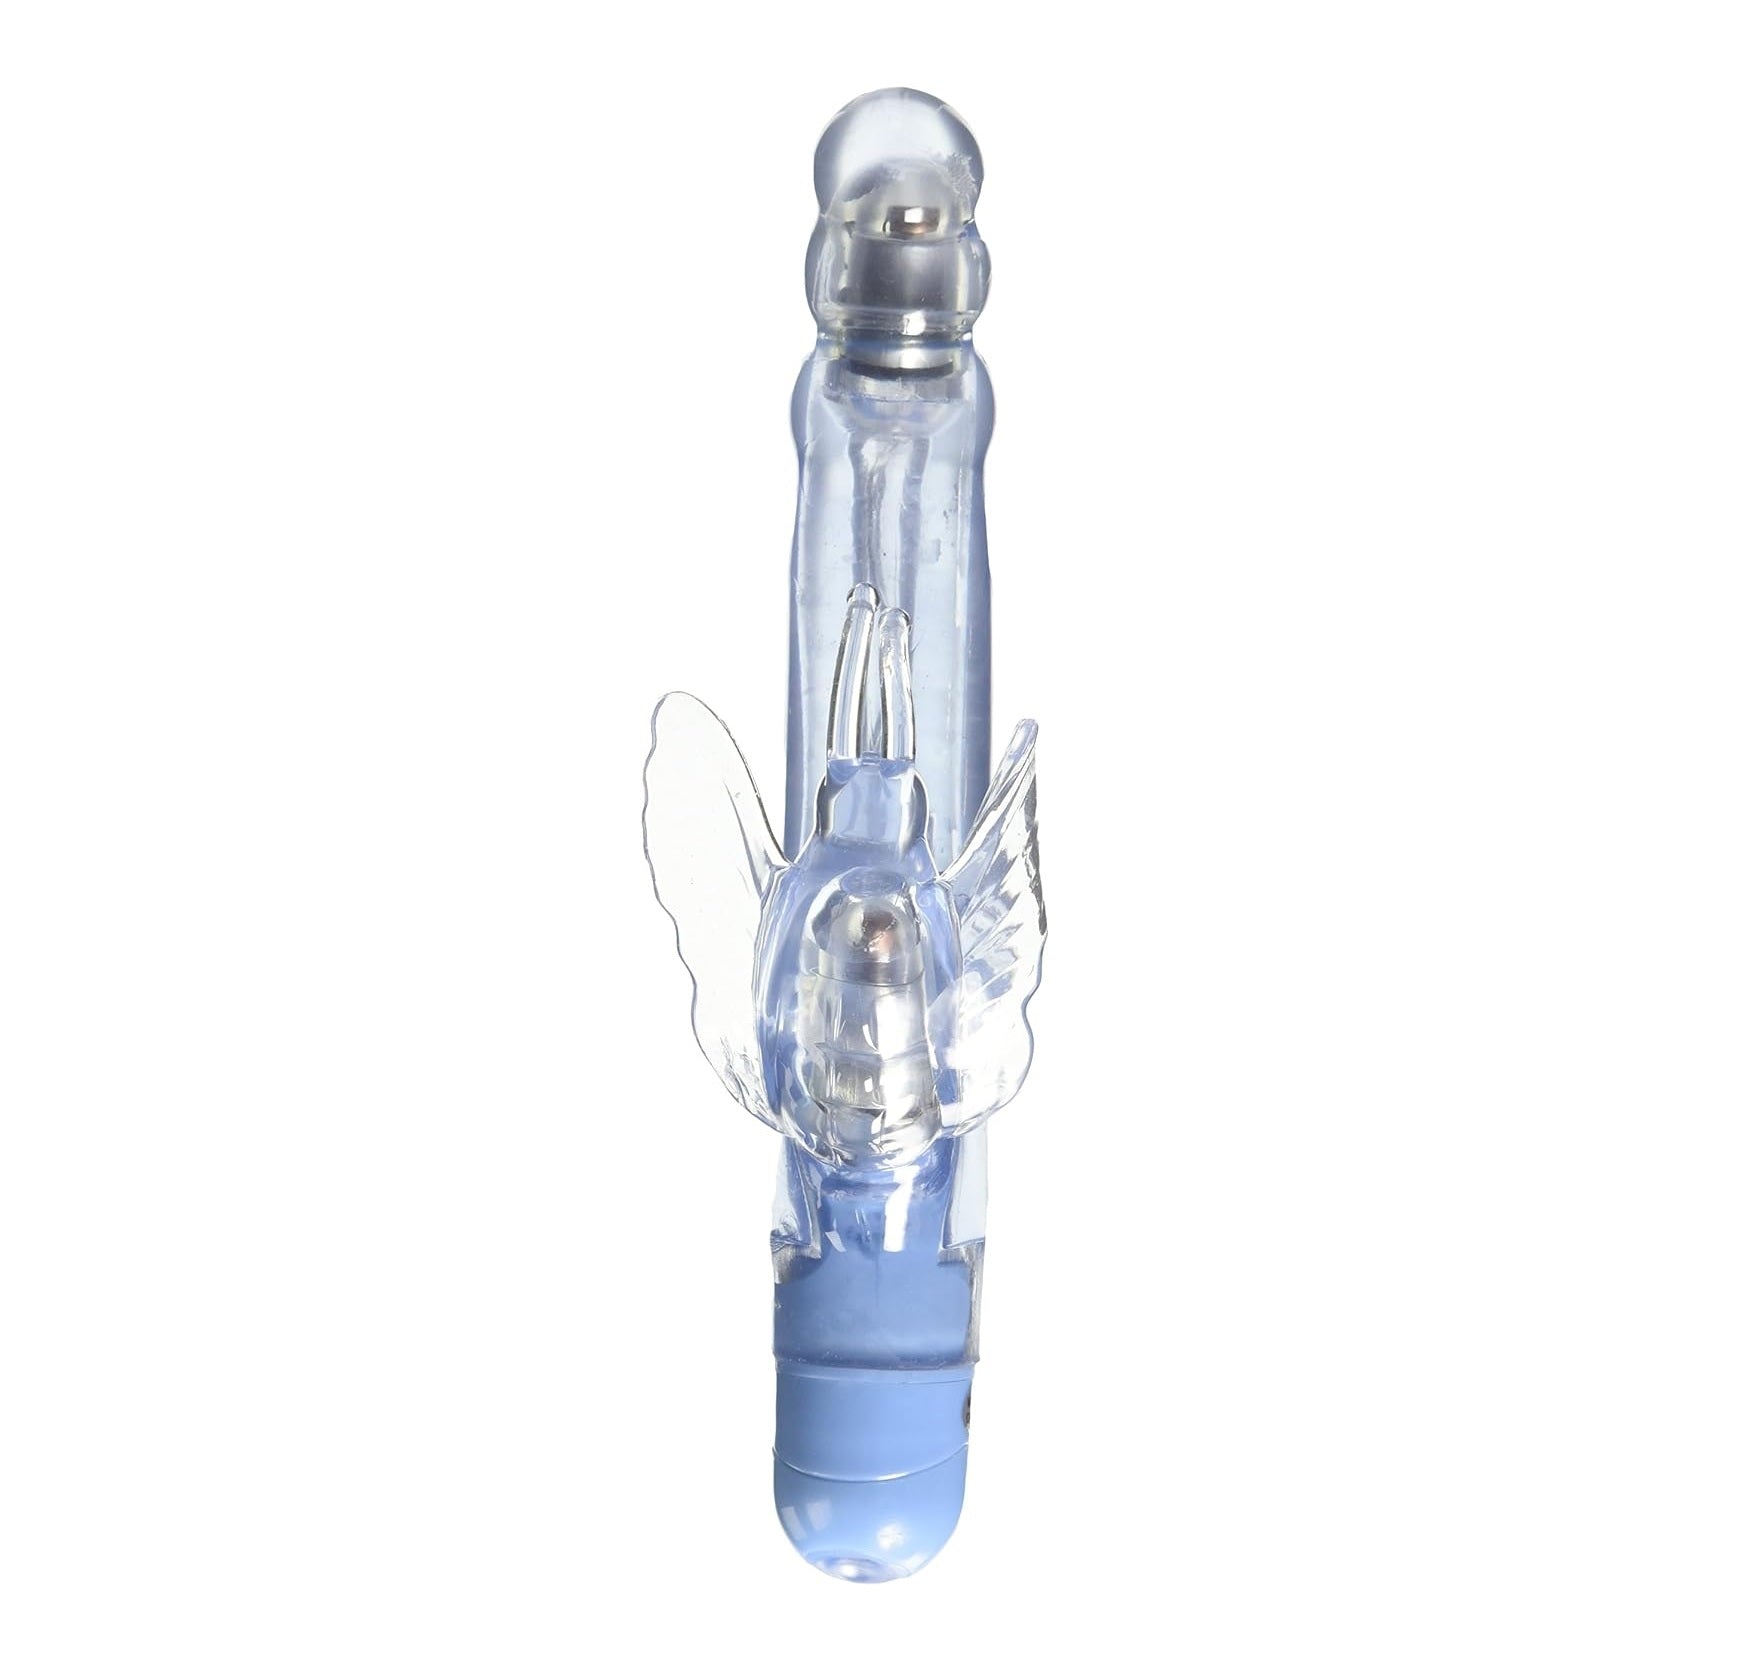 Orgasmic Gel Light Up Sensuous Butterfly Clit Stimulating Rabbit Vibrator - Blue